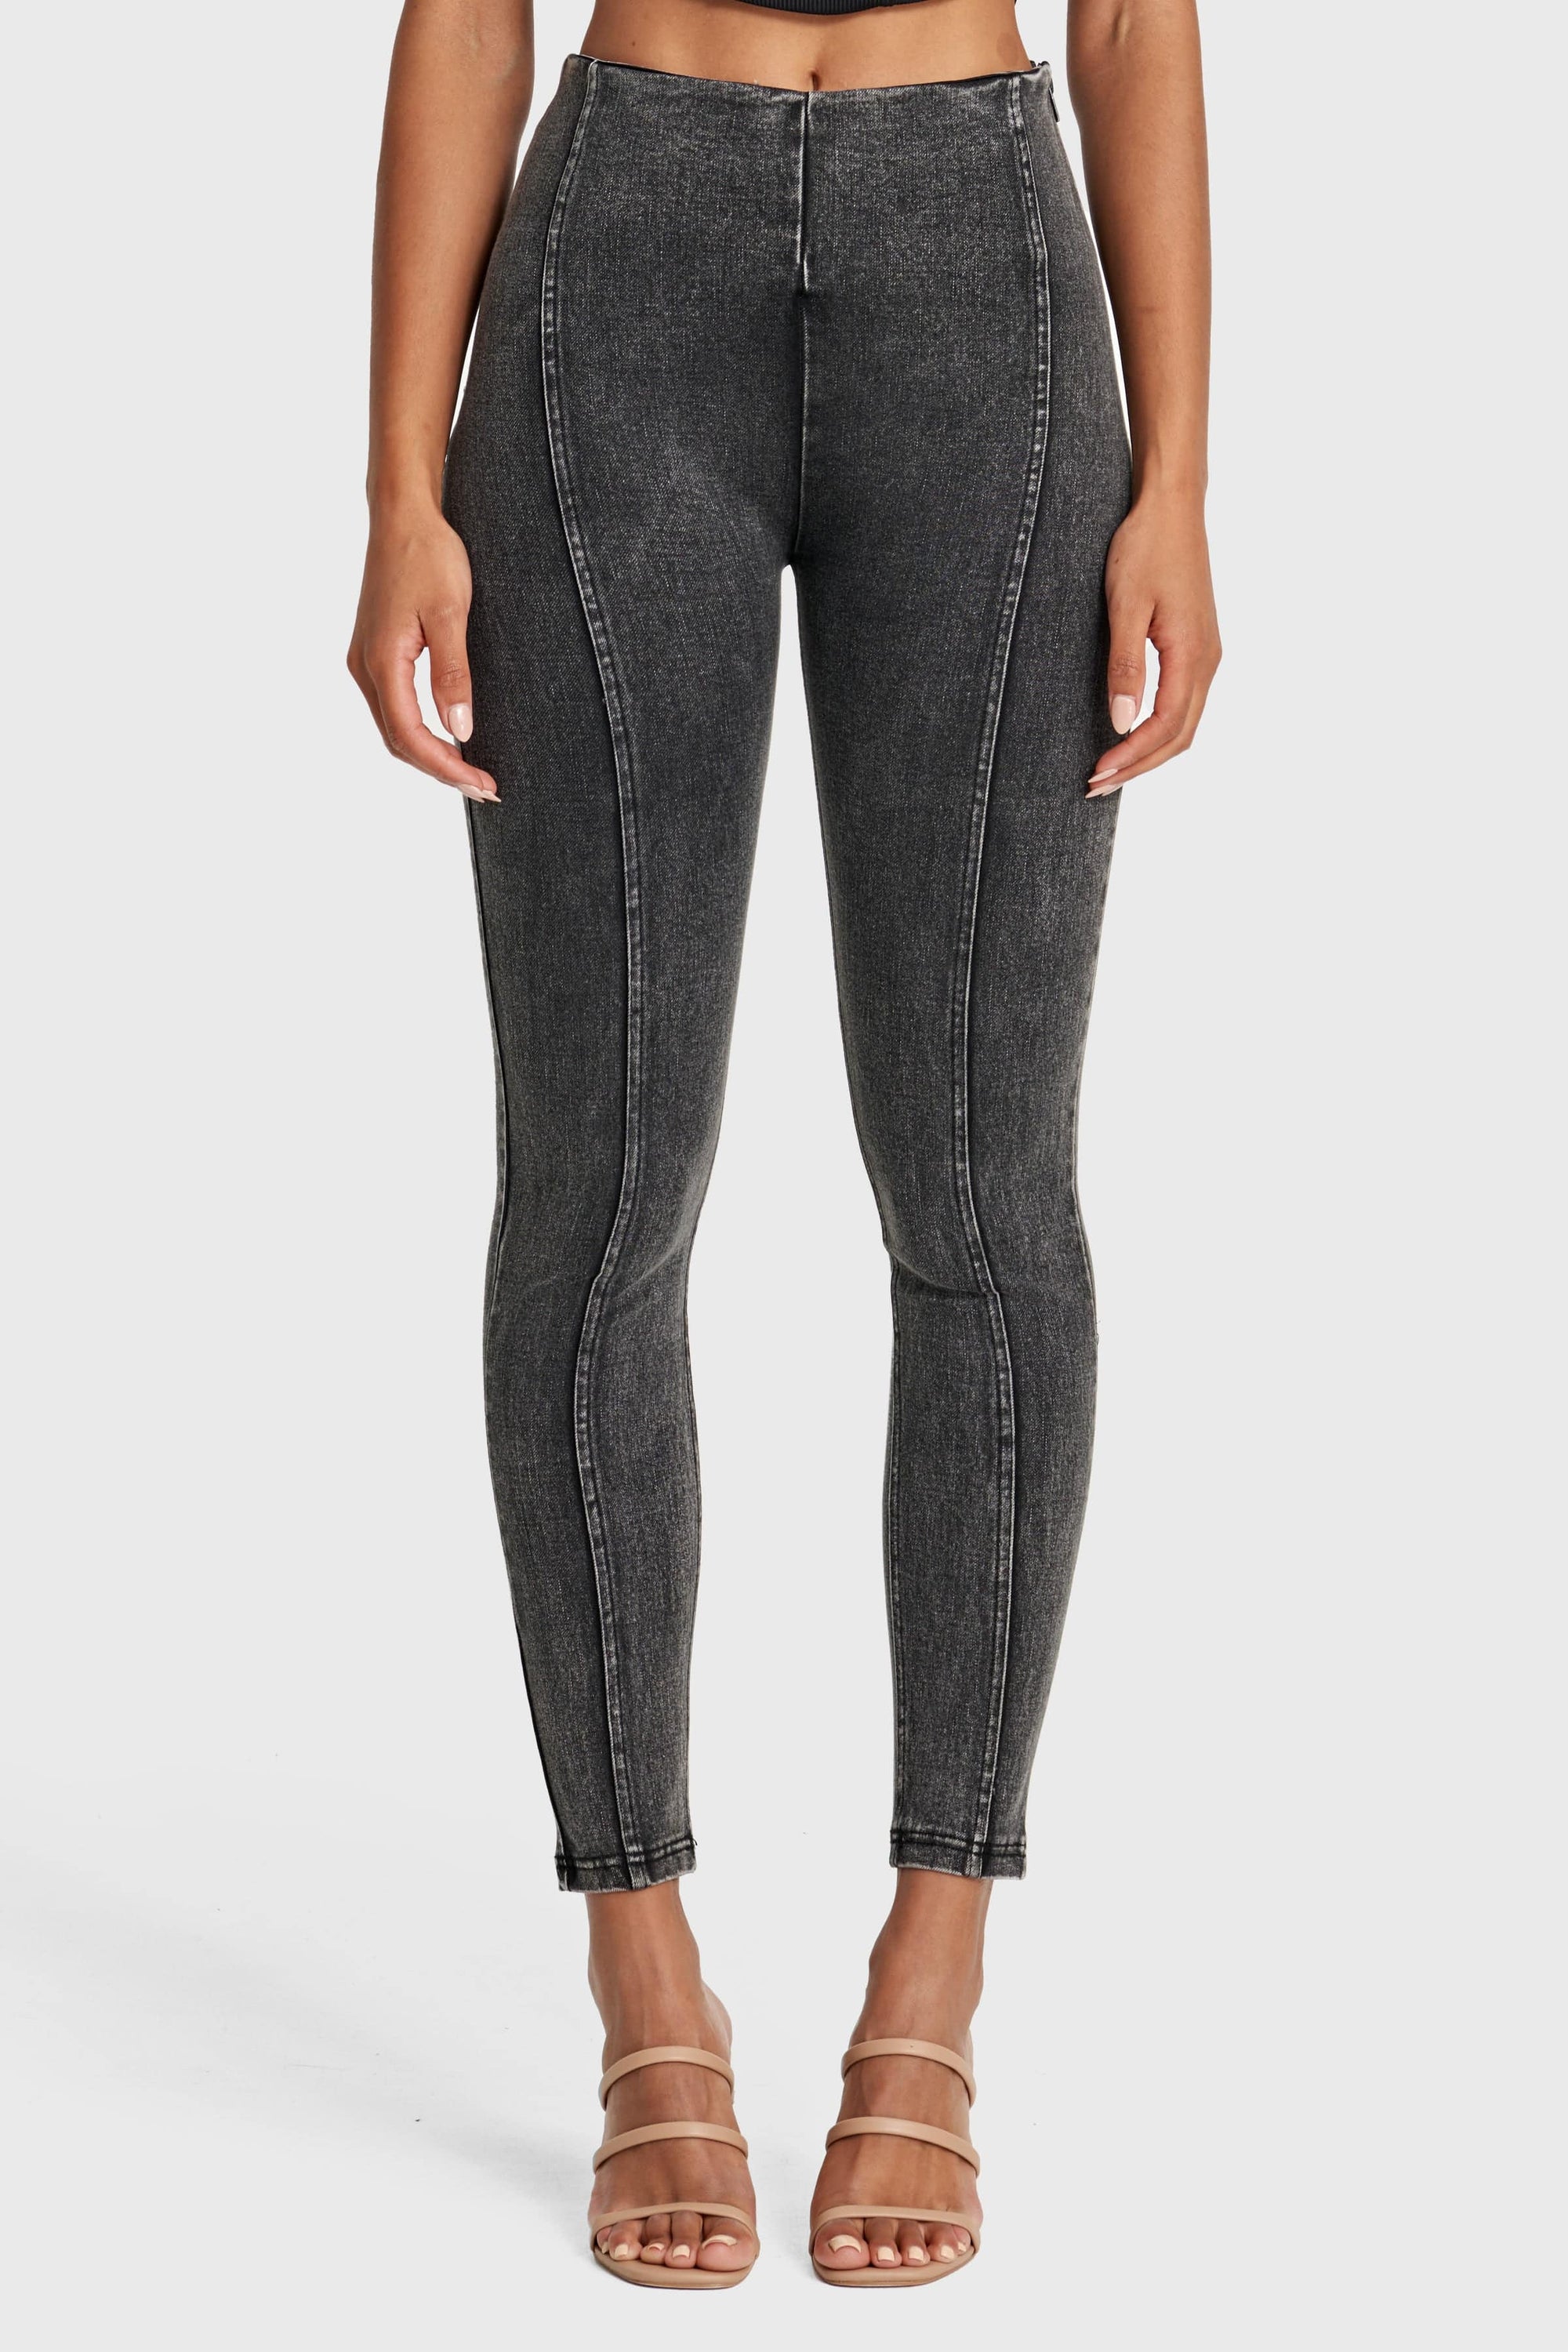 WR.UP® Snug Jeans - High Waisted - Full Length - Washed Black + Black Stitching 7